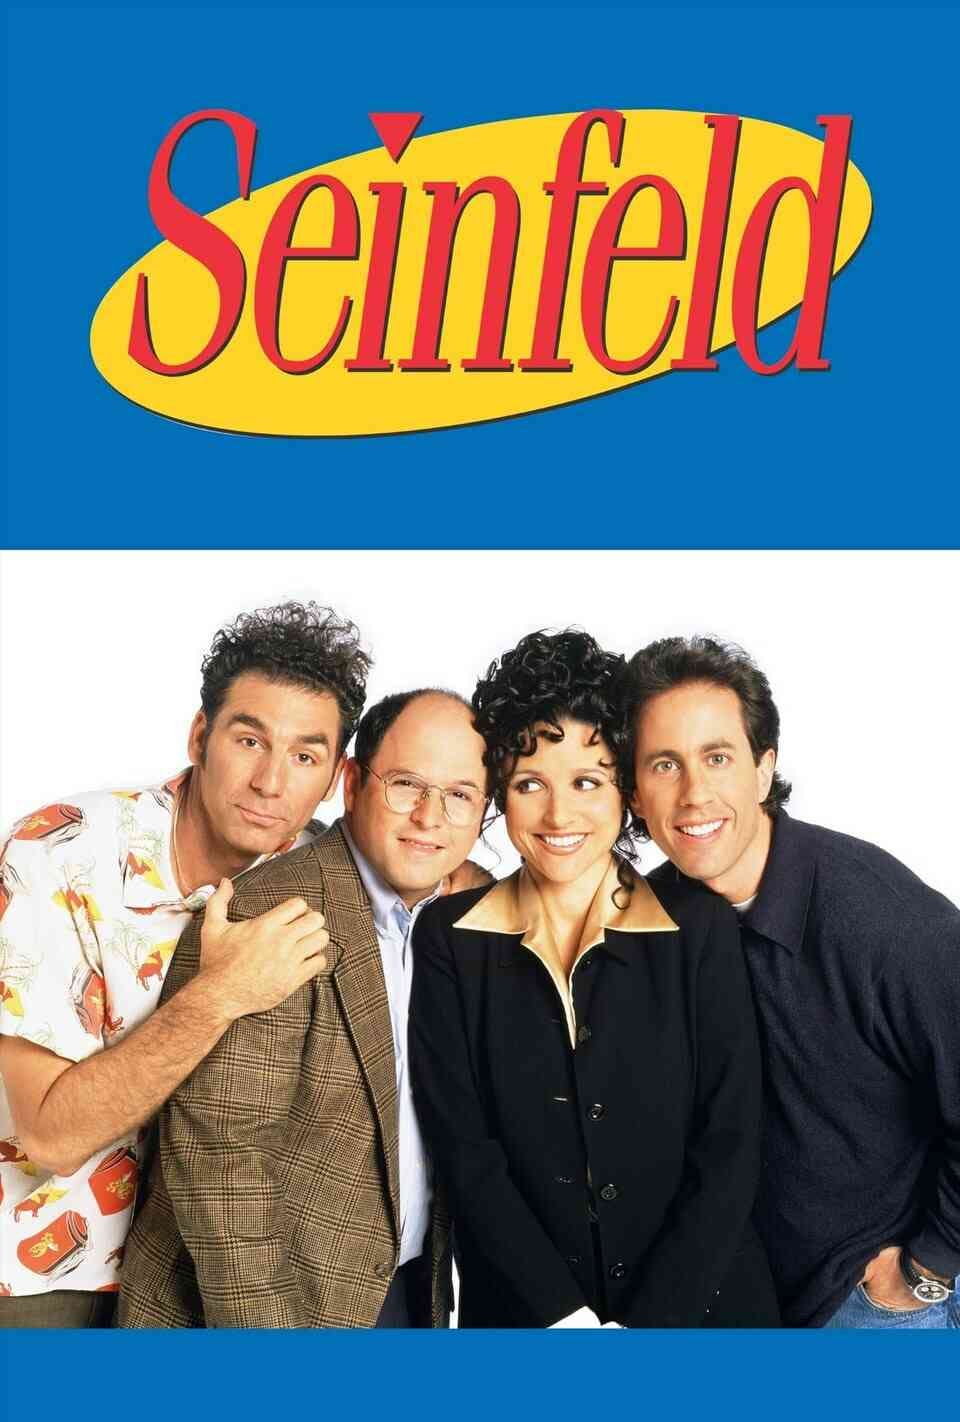 Read Seinfeld screenplay (poster)